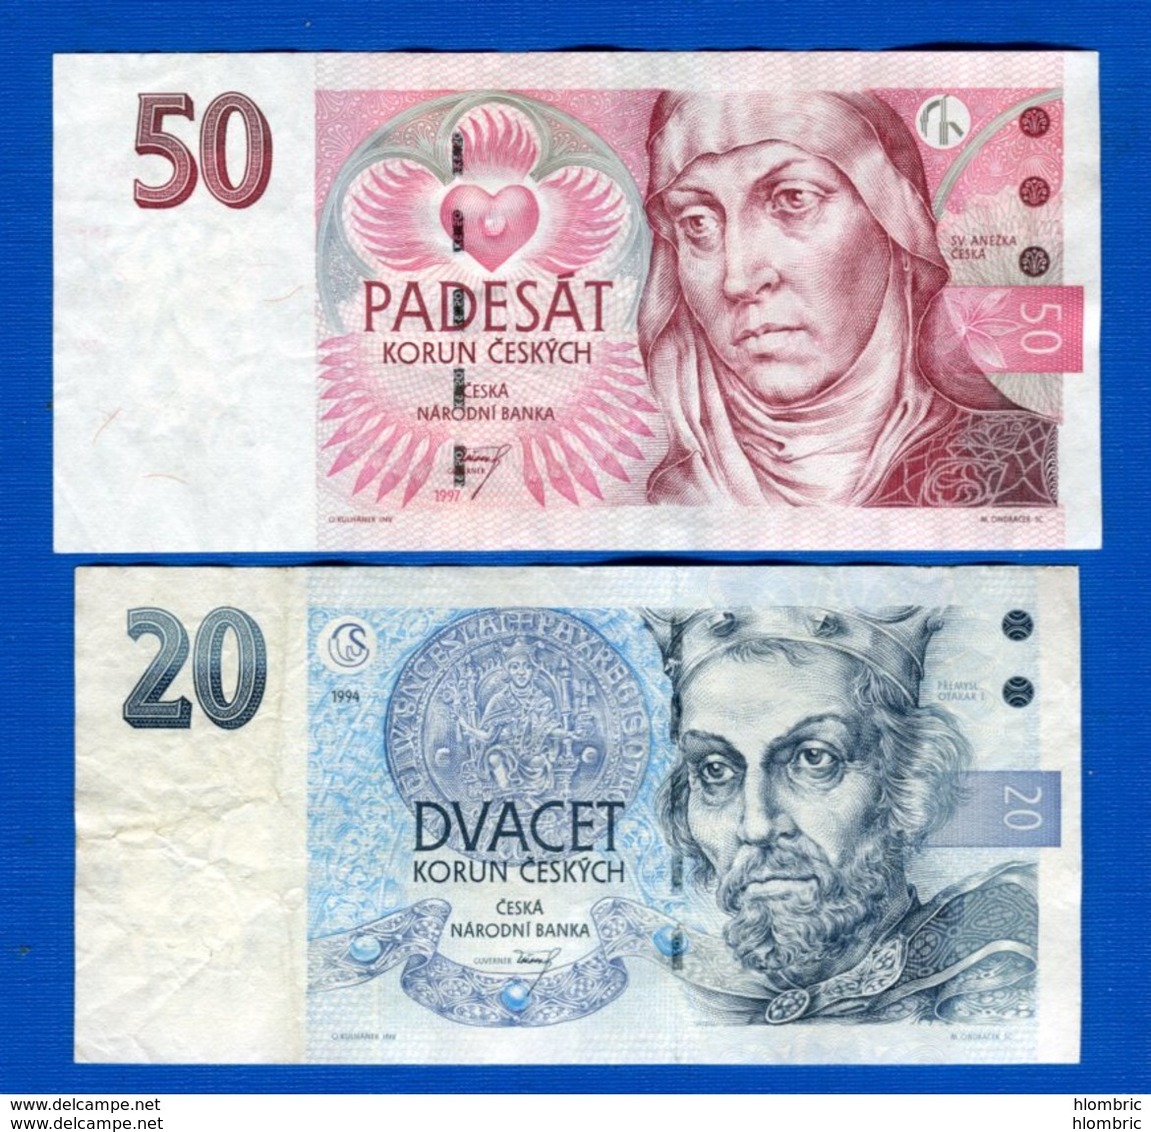 Czech Republic 50 Korun Banknote UNC 1997 P-17 Europe Paper Money